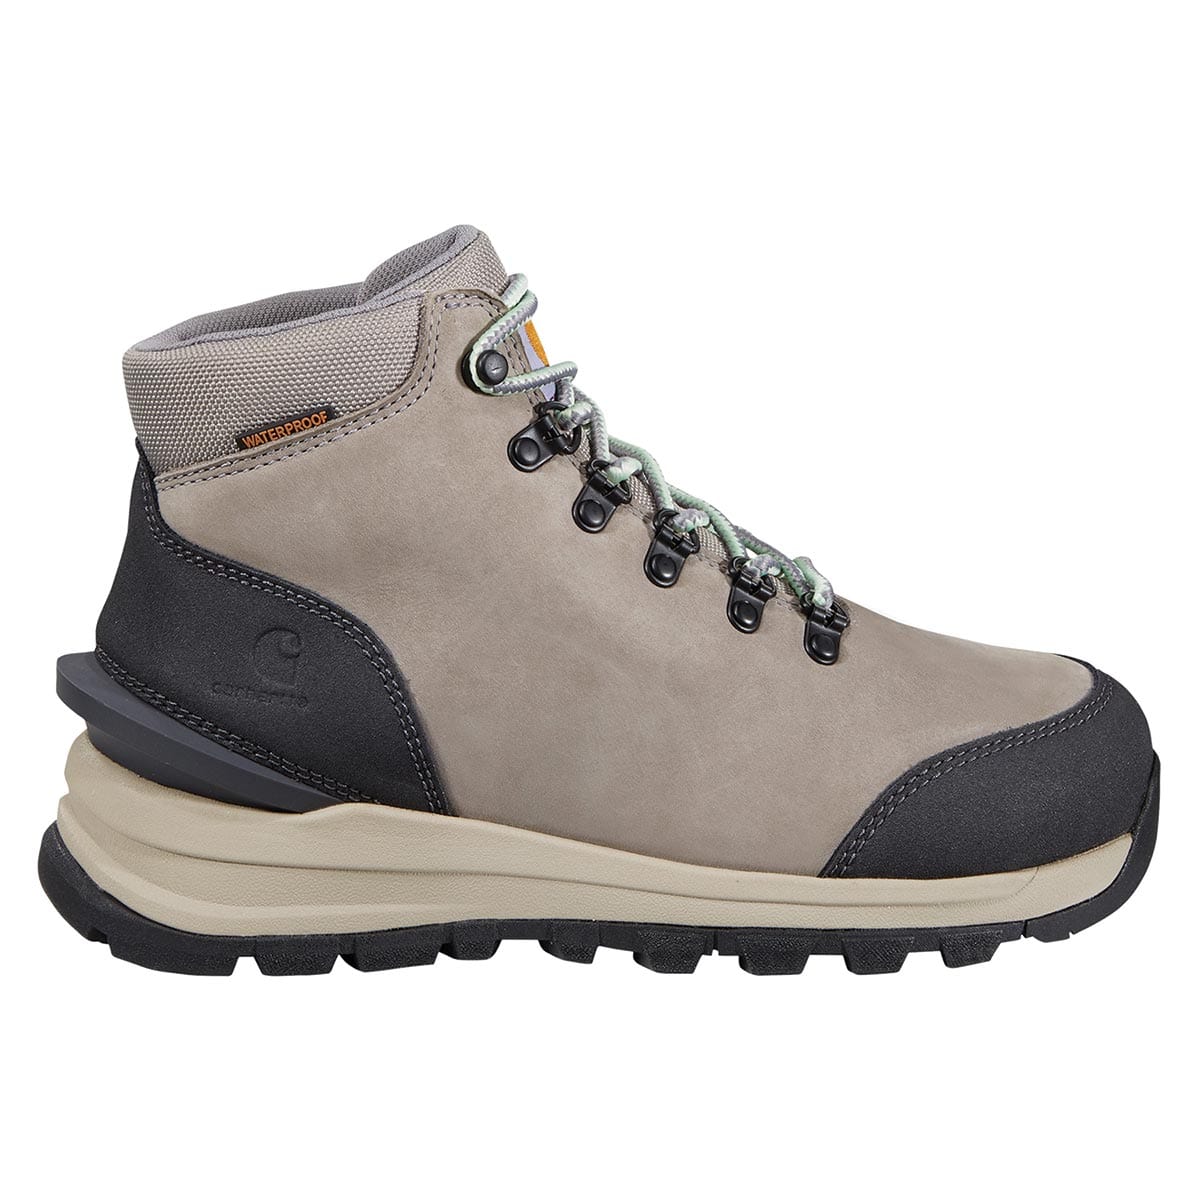 Carhartt Women's Gilmore 5" Work Hiker Boots - Gray